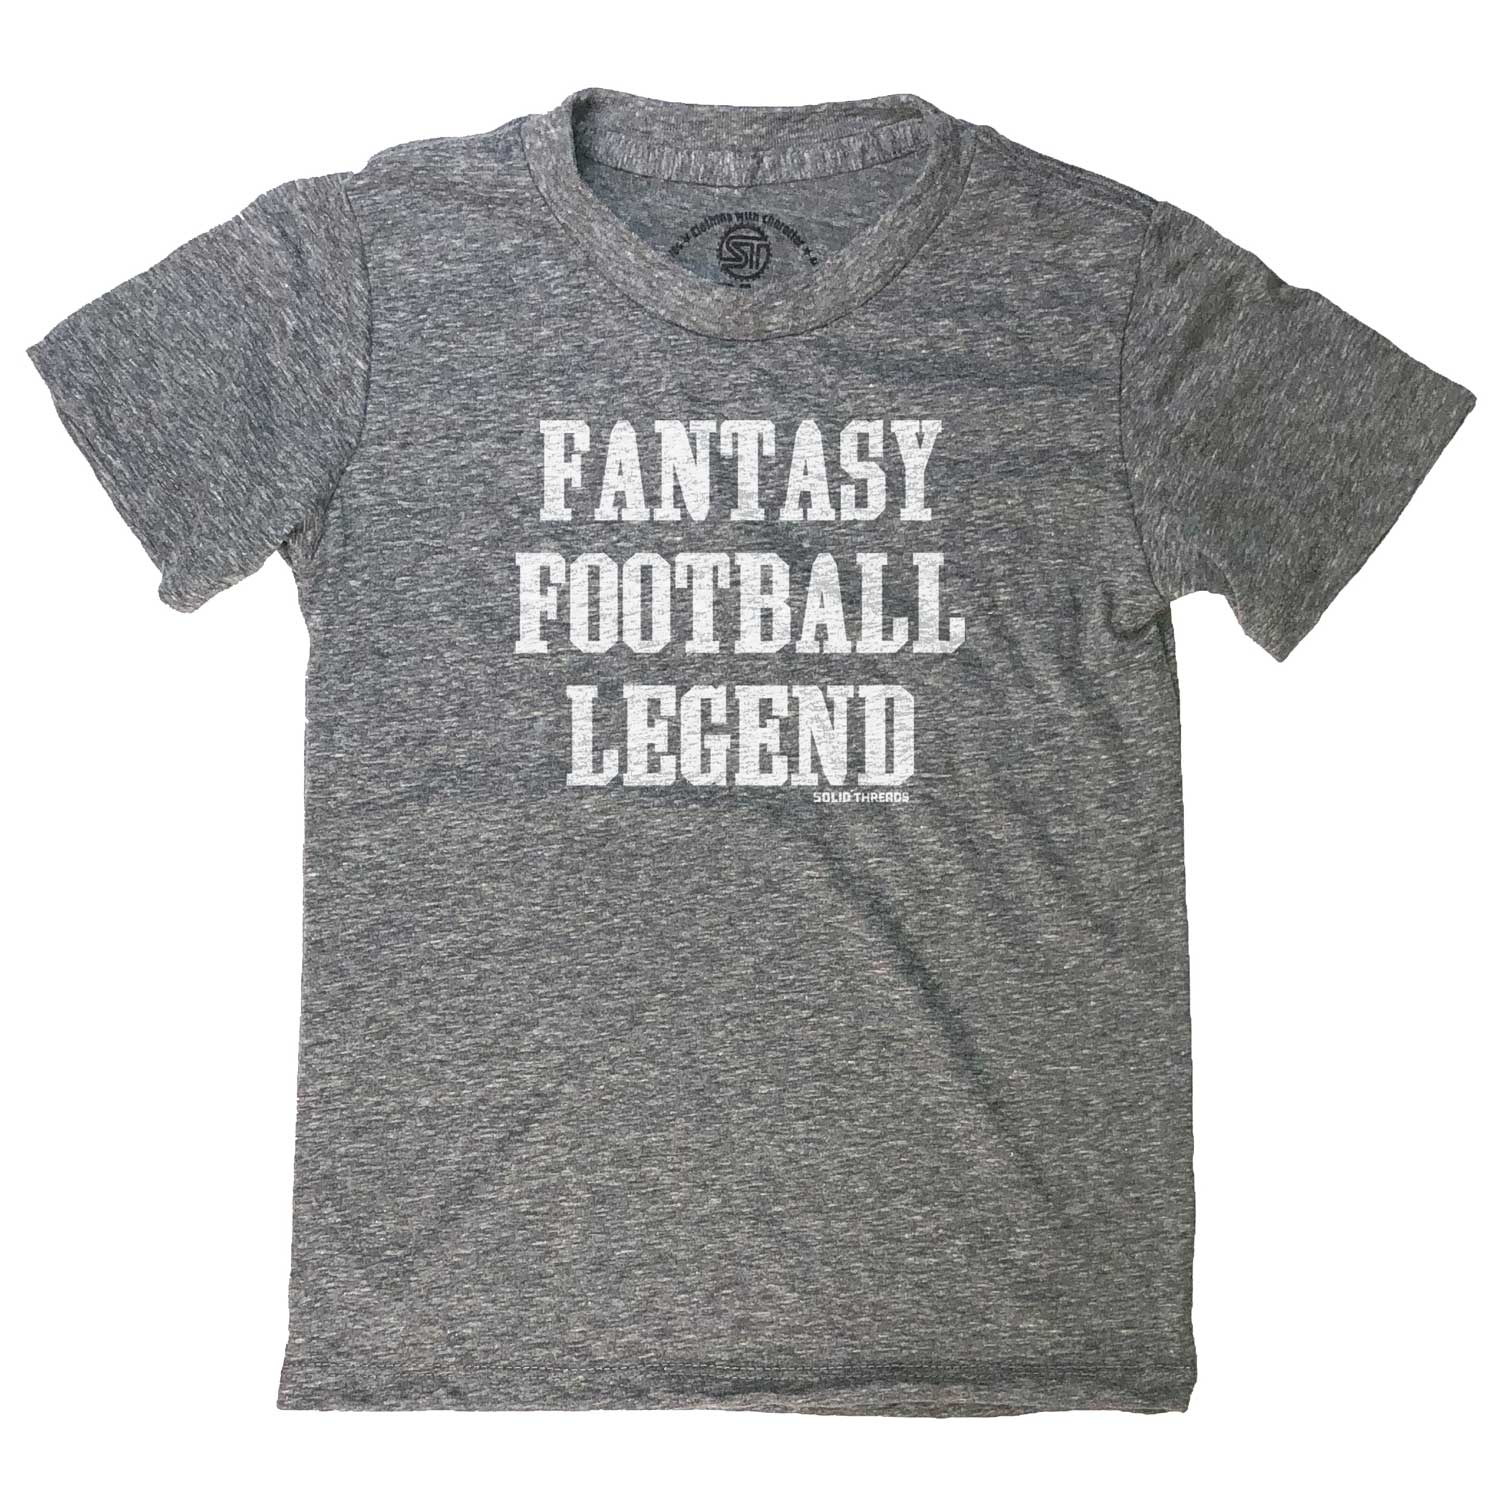 Kids' Fantasy Football Legend Vintage Graphic Tee | Retro Football T-shirt | Solid Threads